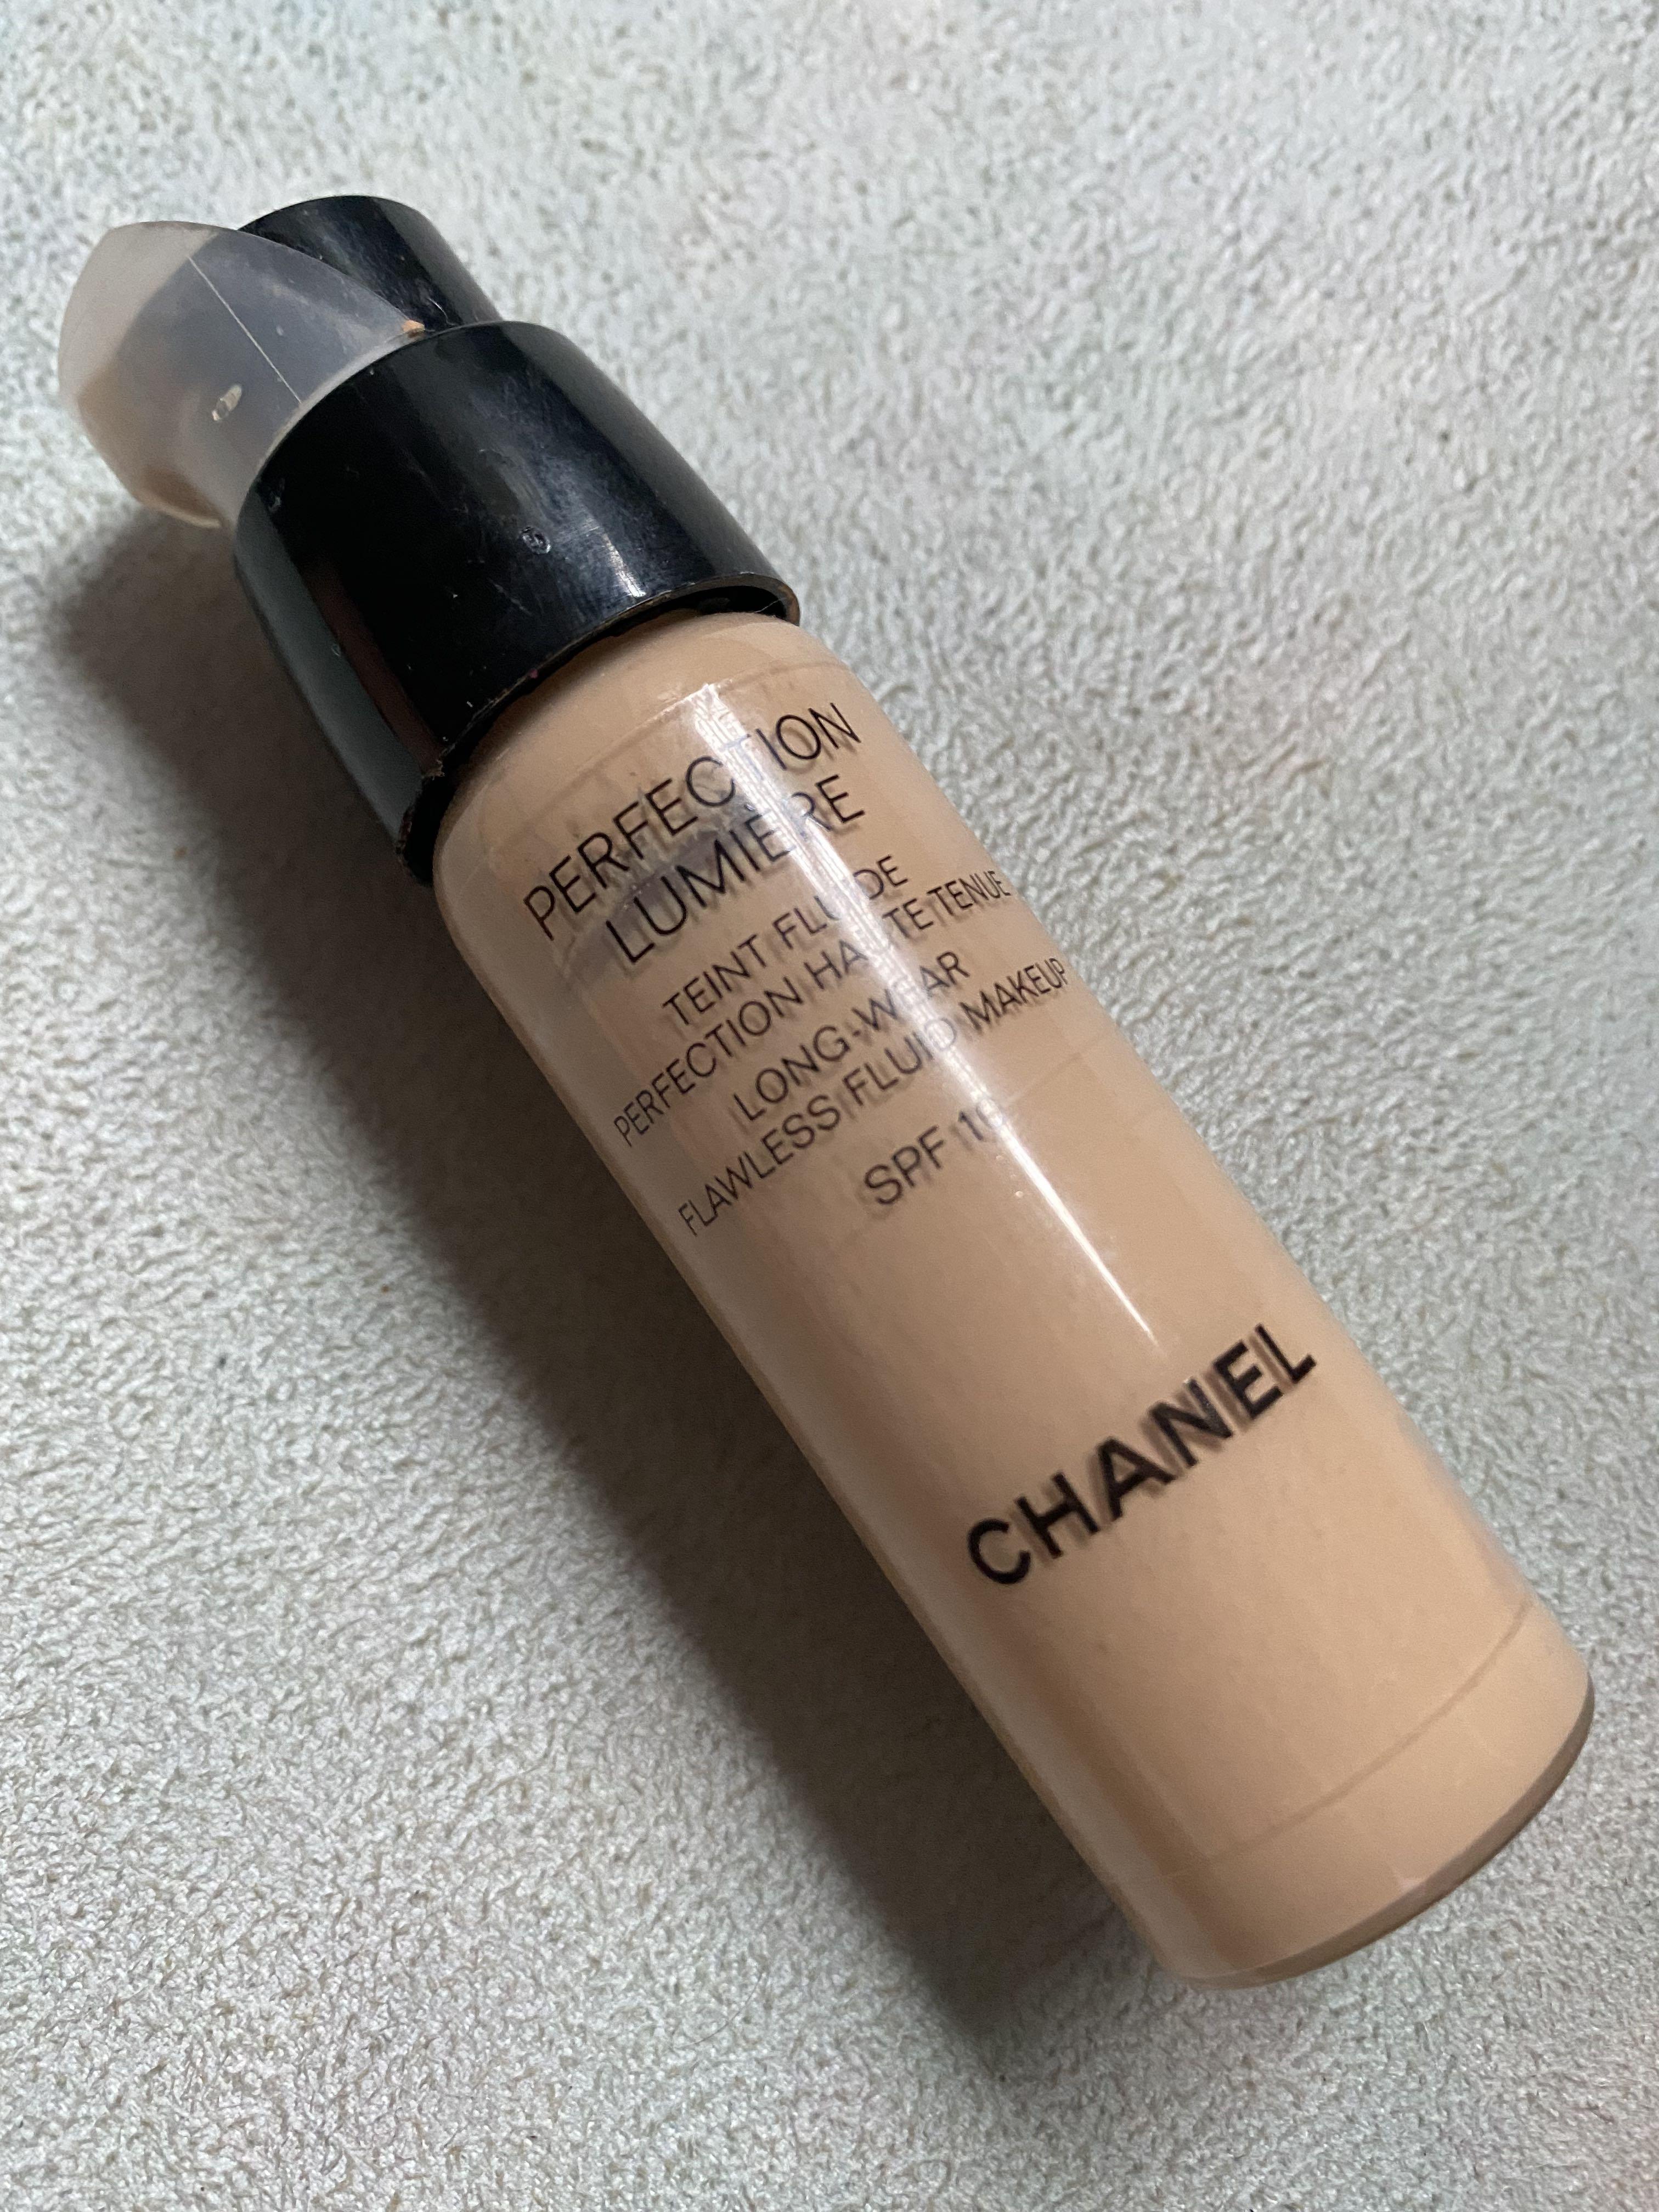 Chanel Perfection Lumière Long-Wearing Flawless Fluid Makeup SPF 10 30  Beige